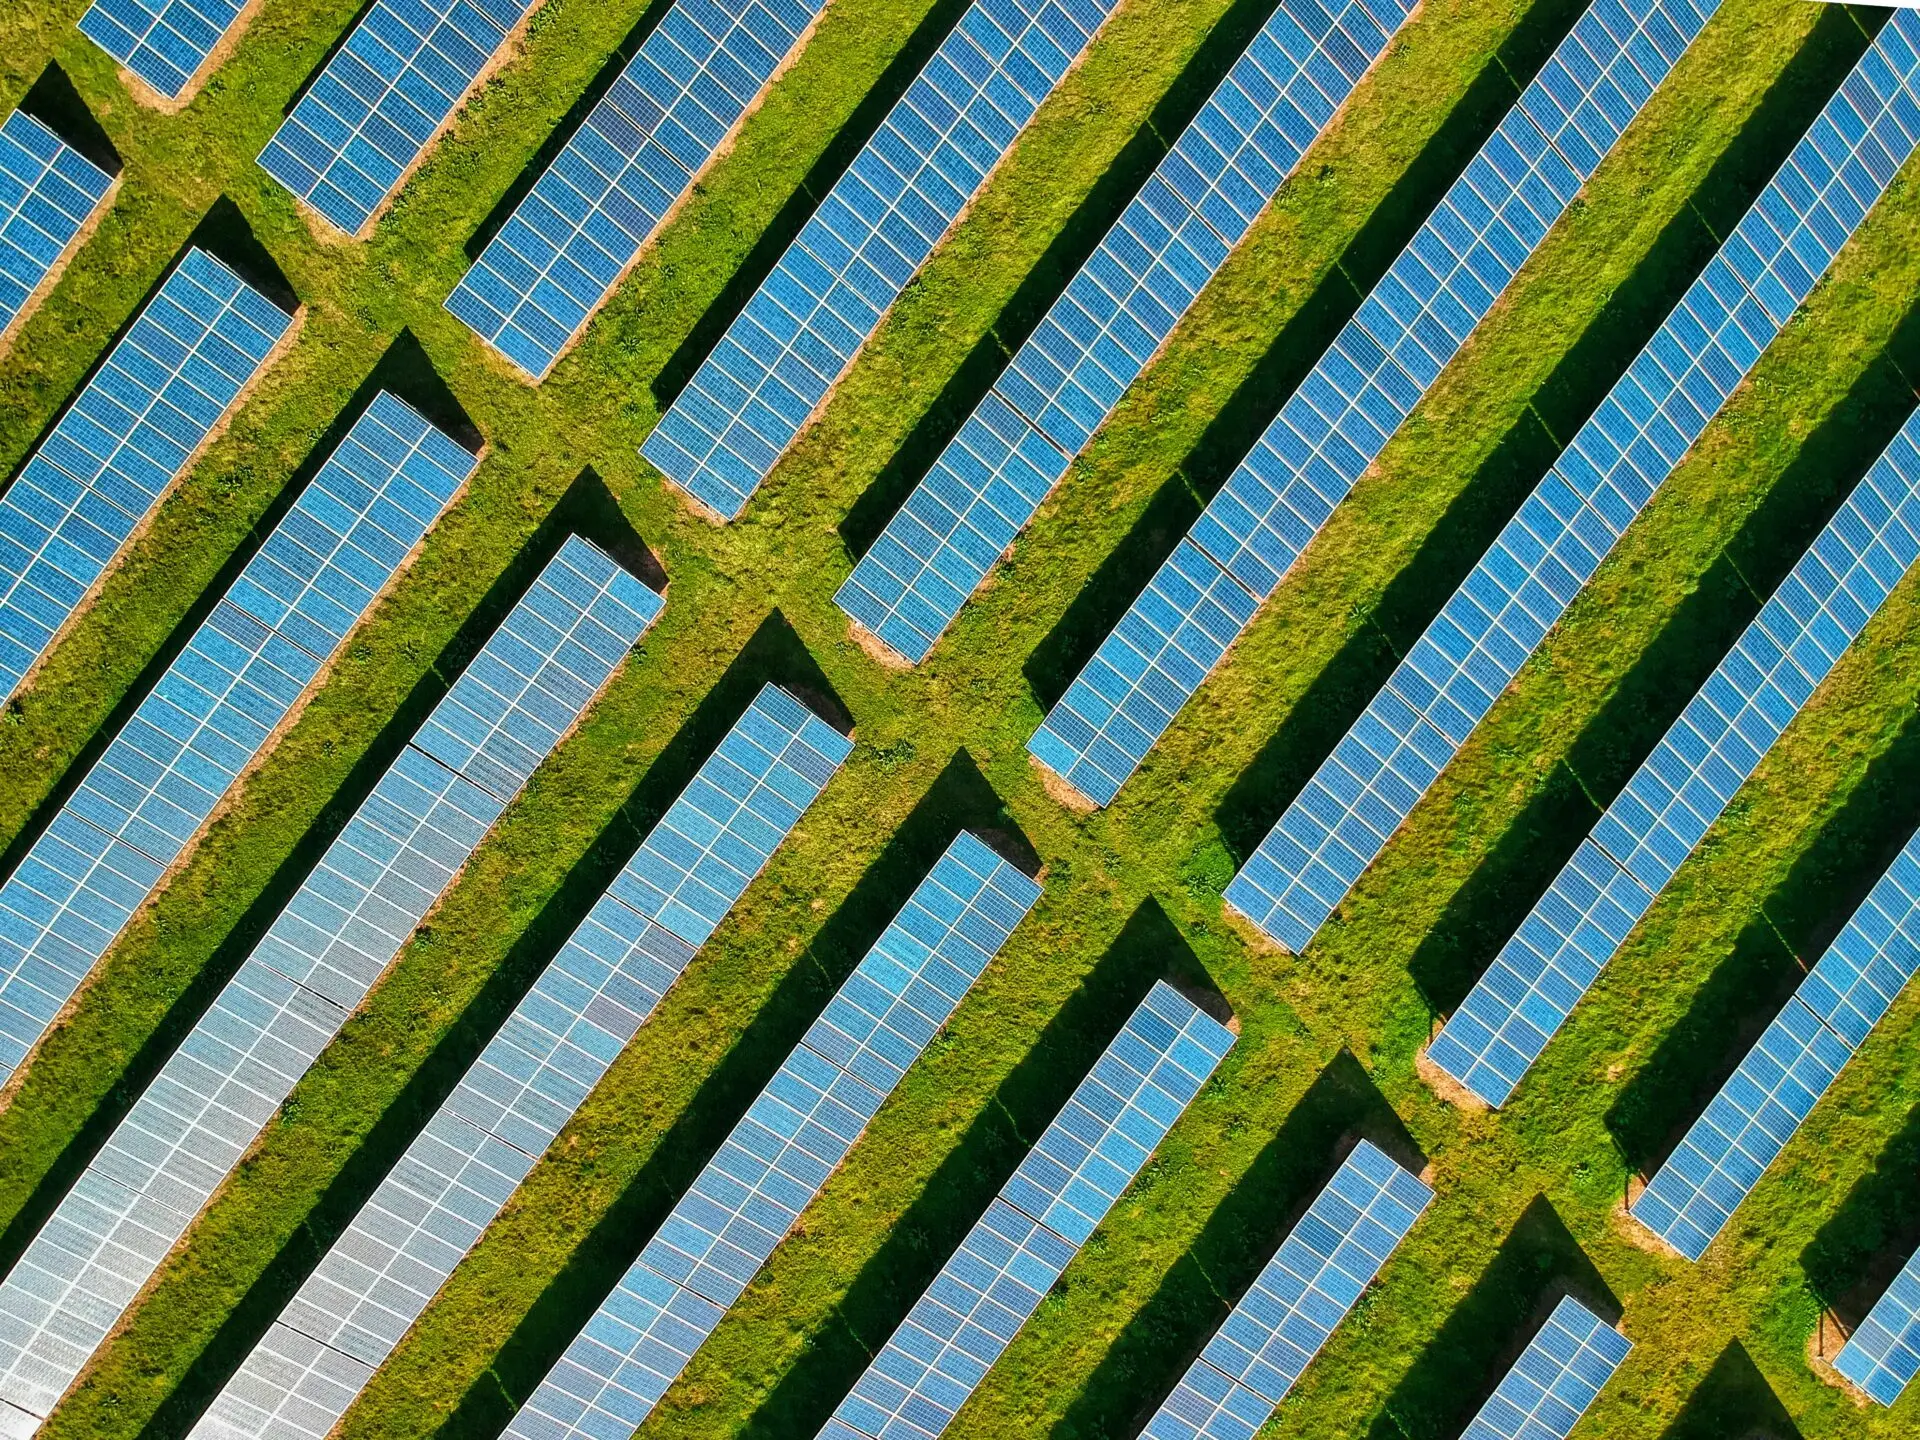 Aerial view of solar panels on a solar farm